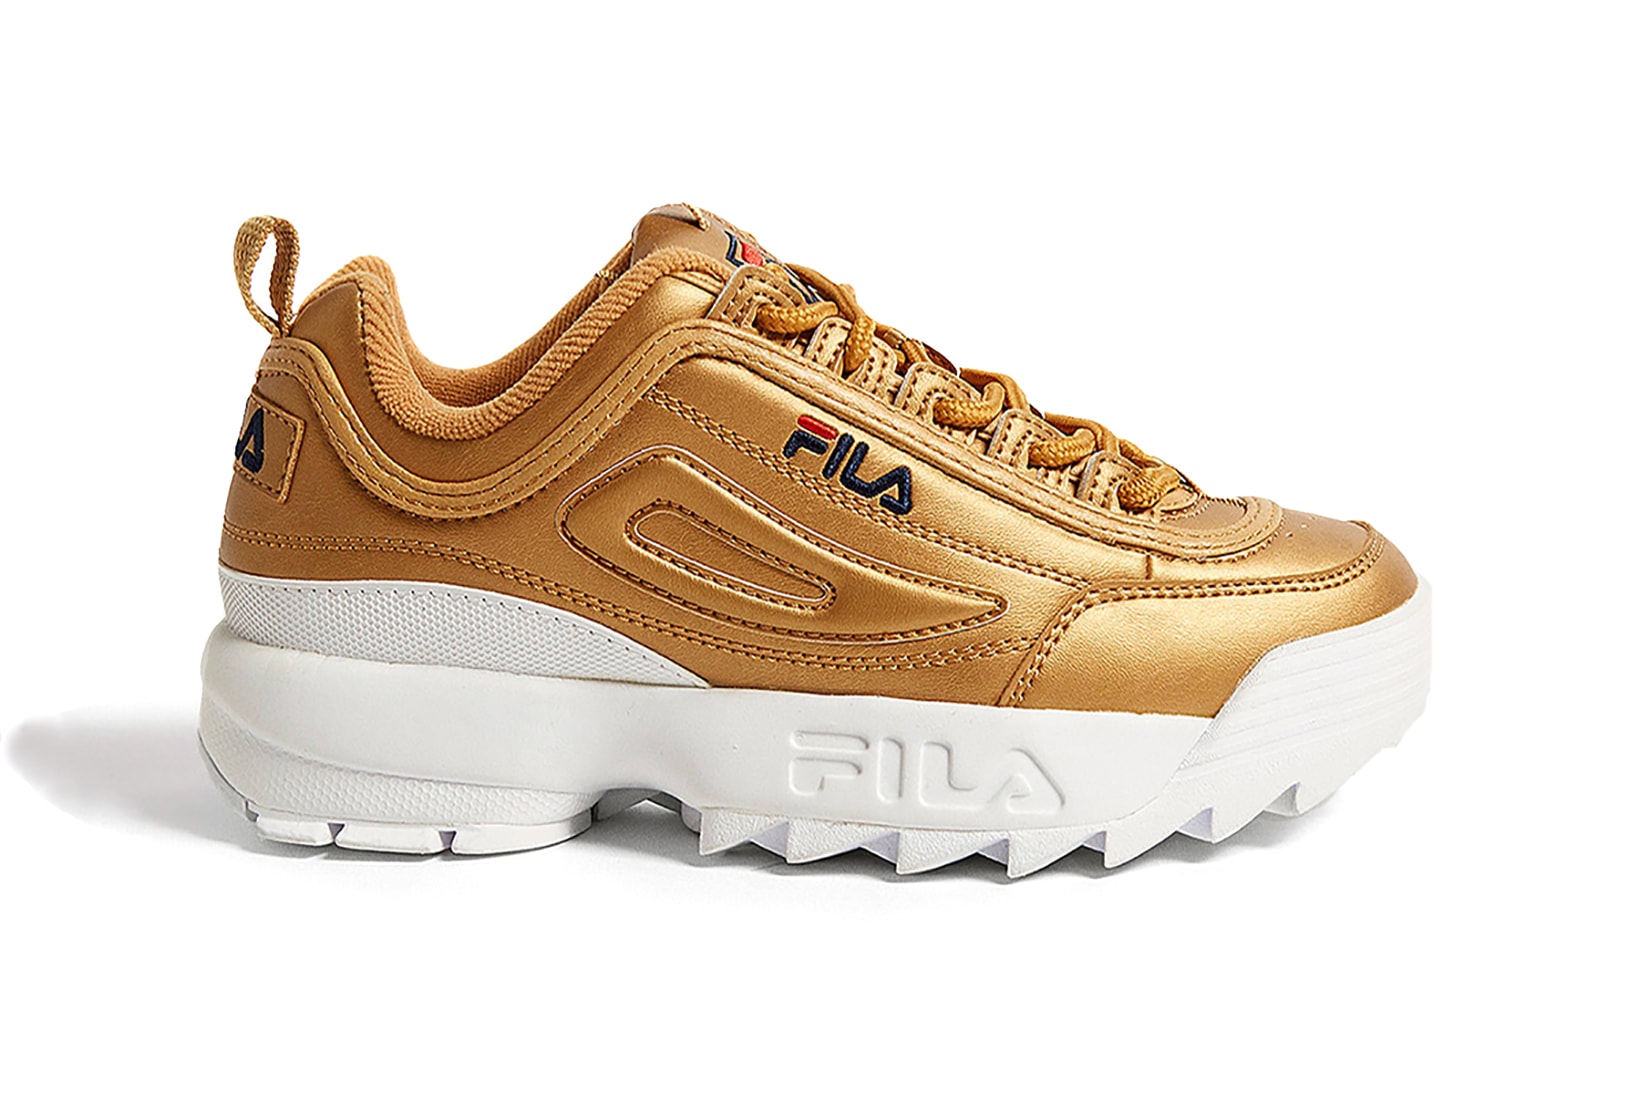 FILA disruptor 2 II metallic gold leather premium metal chunky bulky dad shoe sneakers womens where to buy urban outfitters